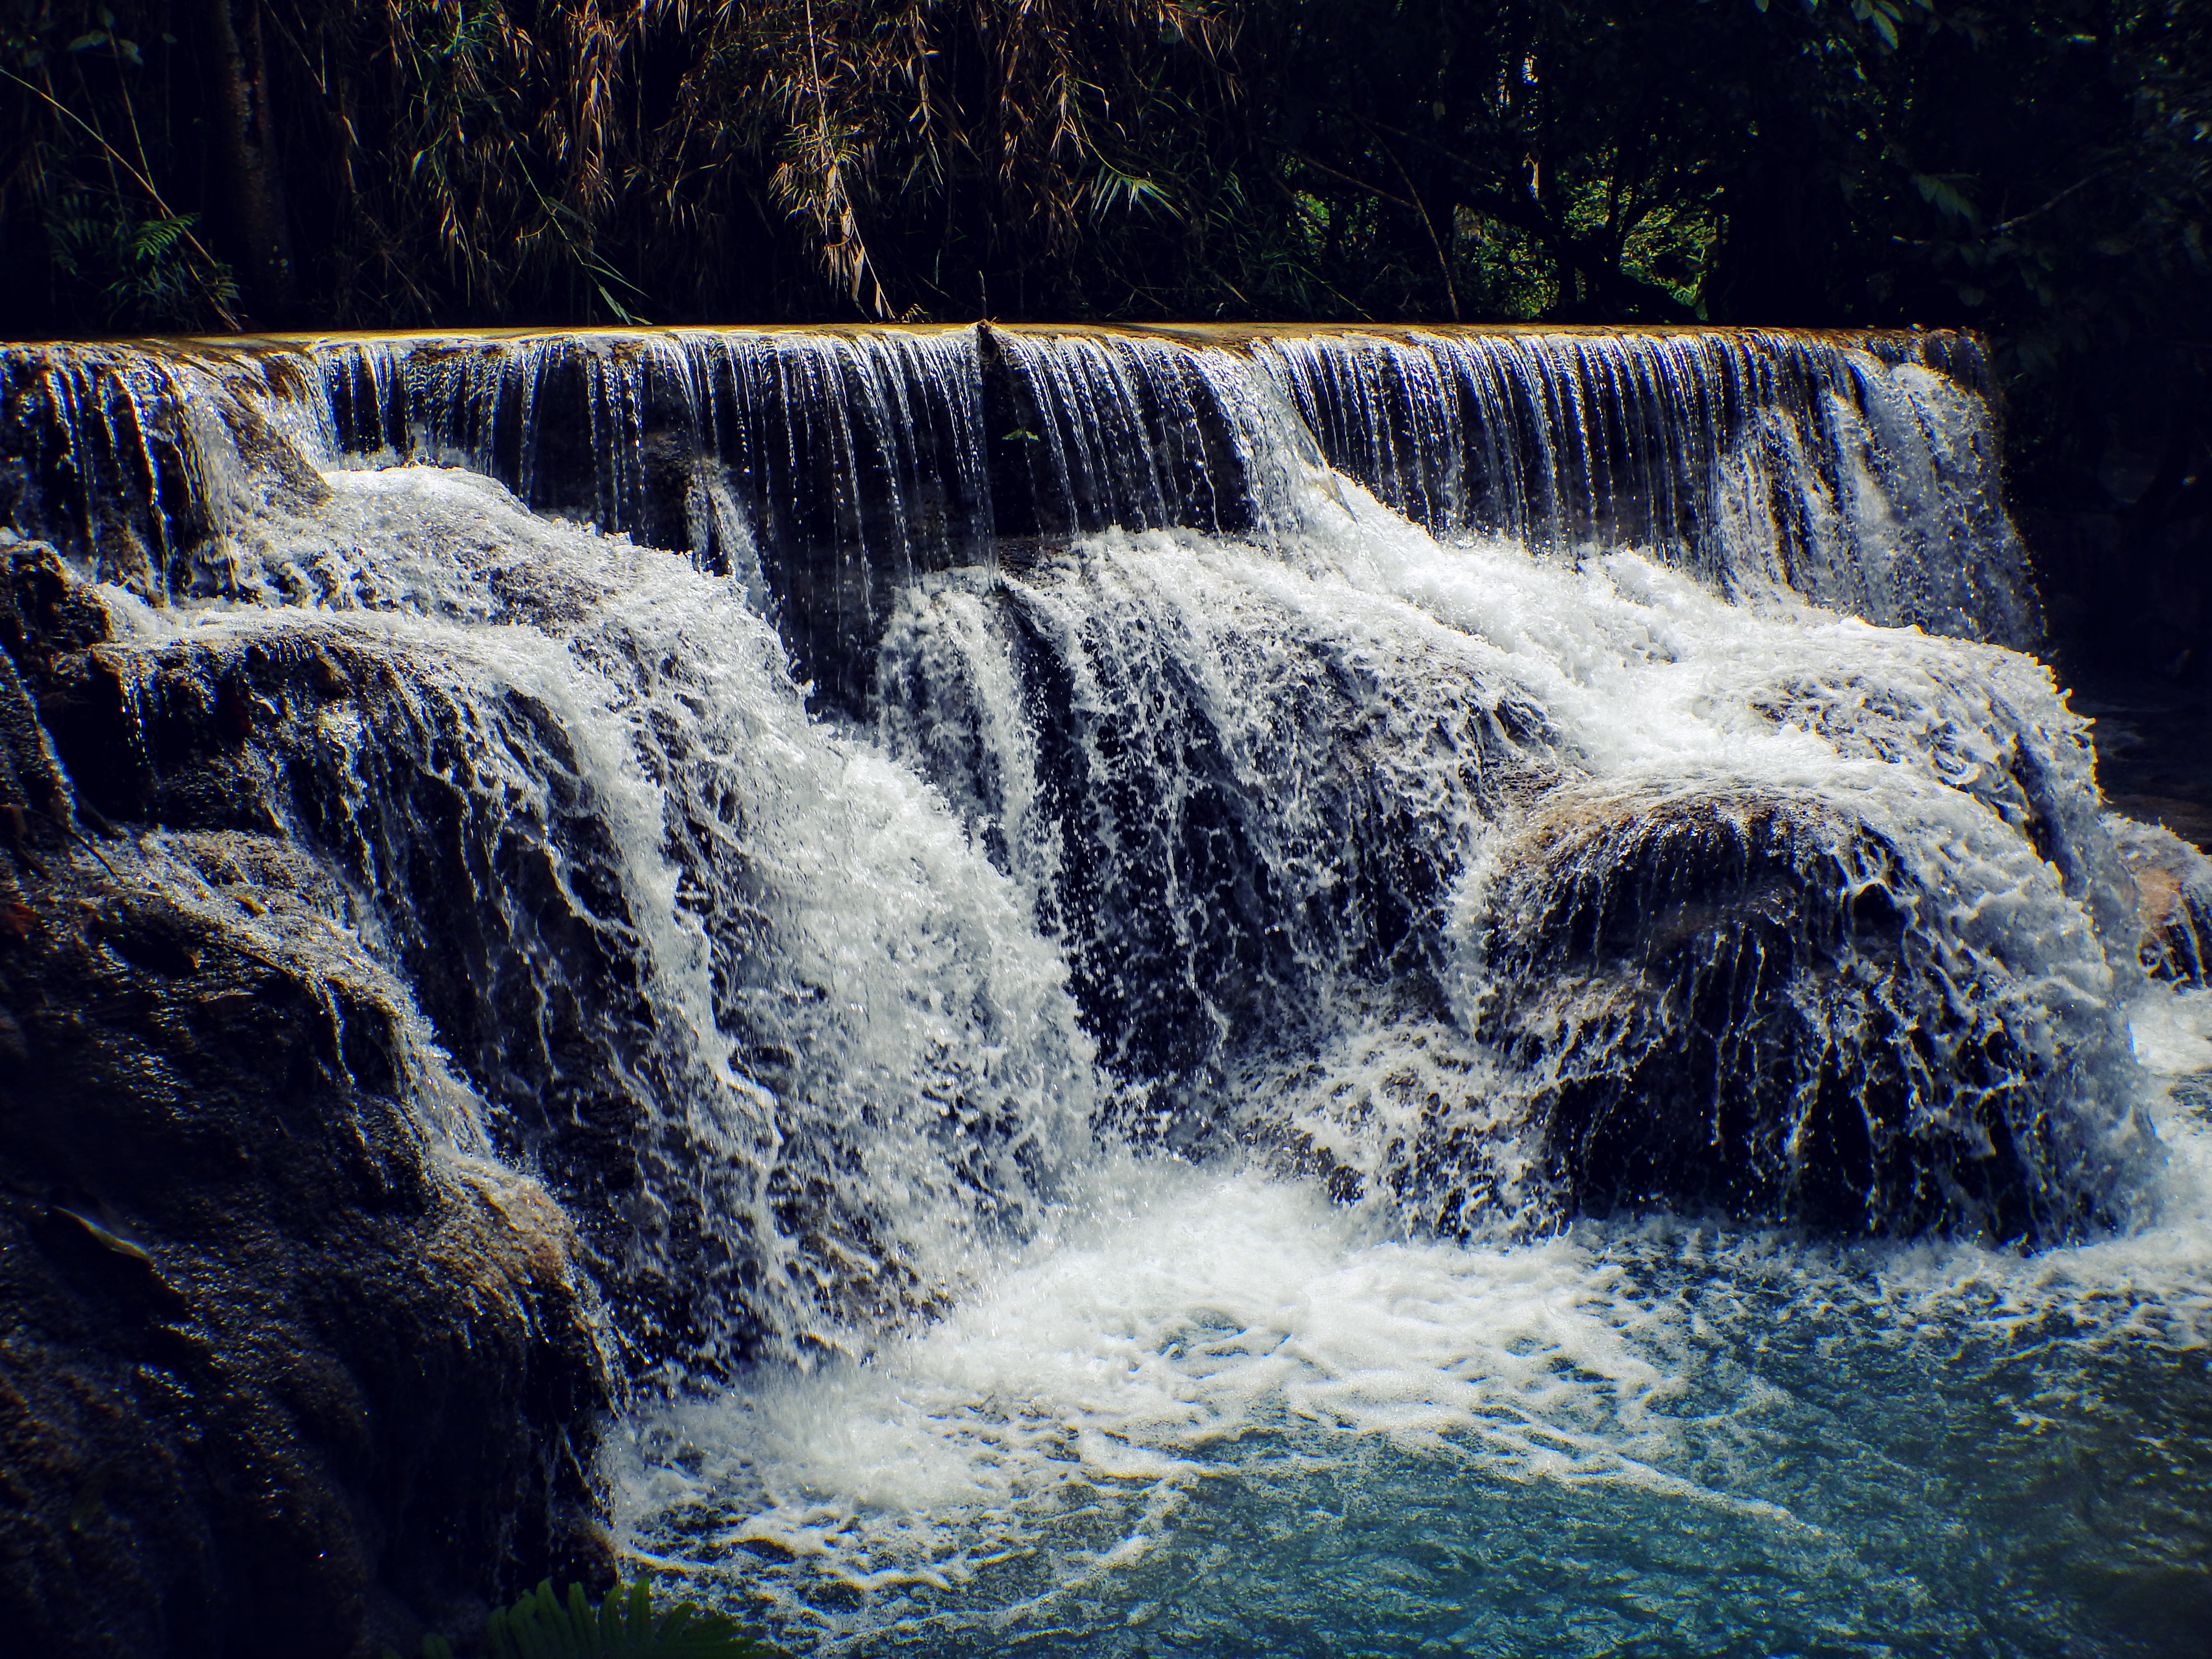 Kuang Si Waterfall near Luang Prabang, Laos